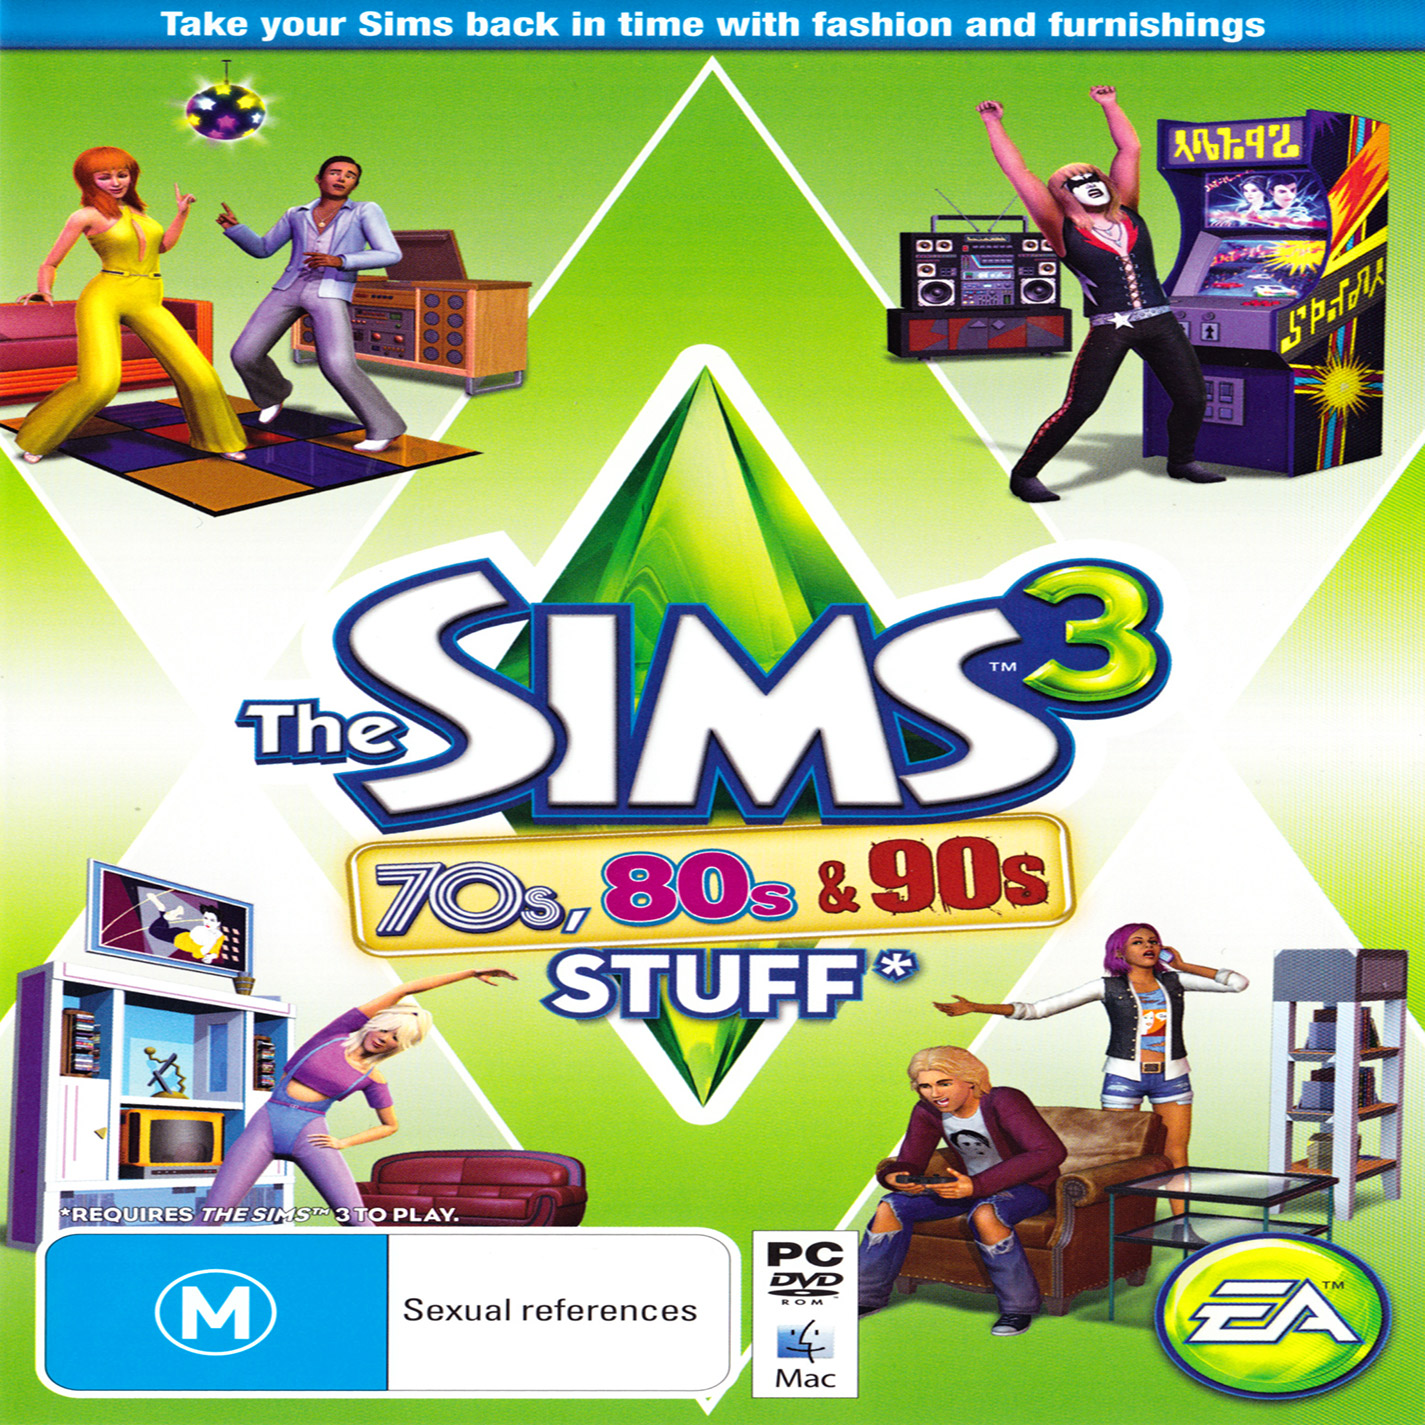 The Sims 3: 70s, 80s, & 90s Stuff - predn CD obal